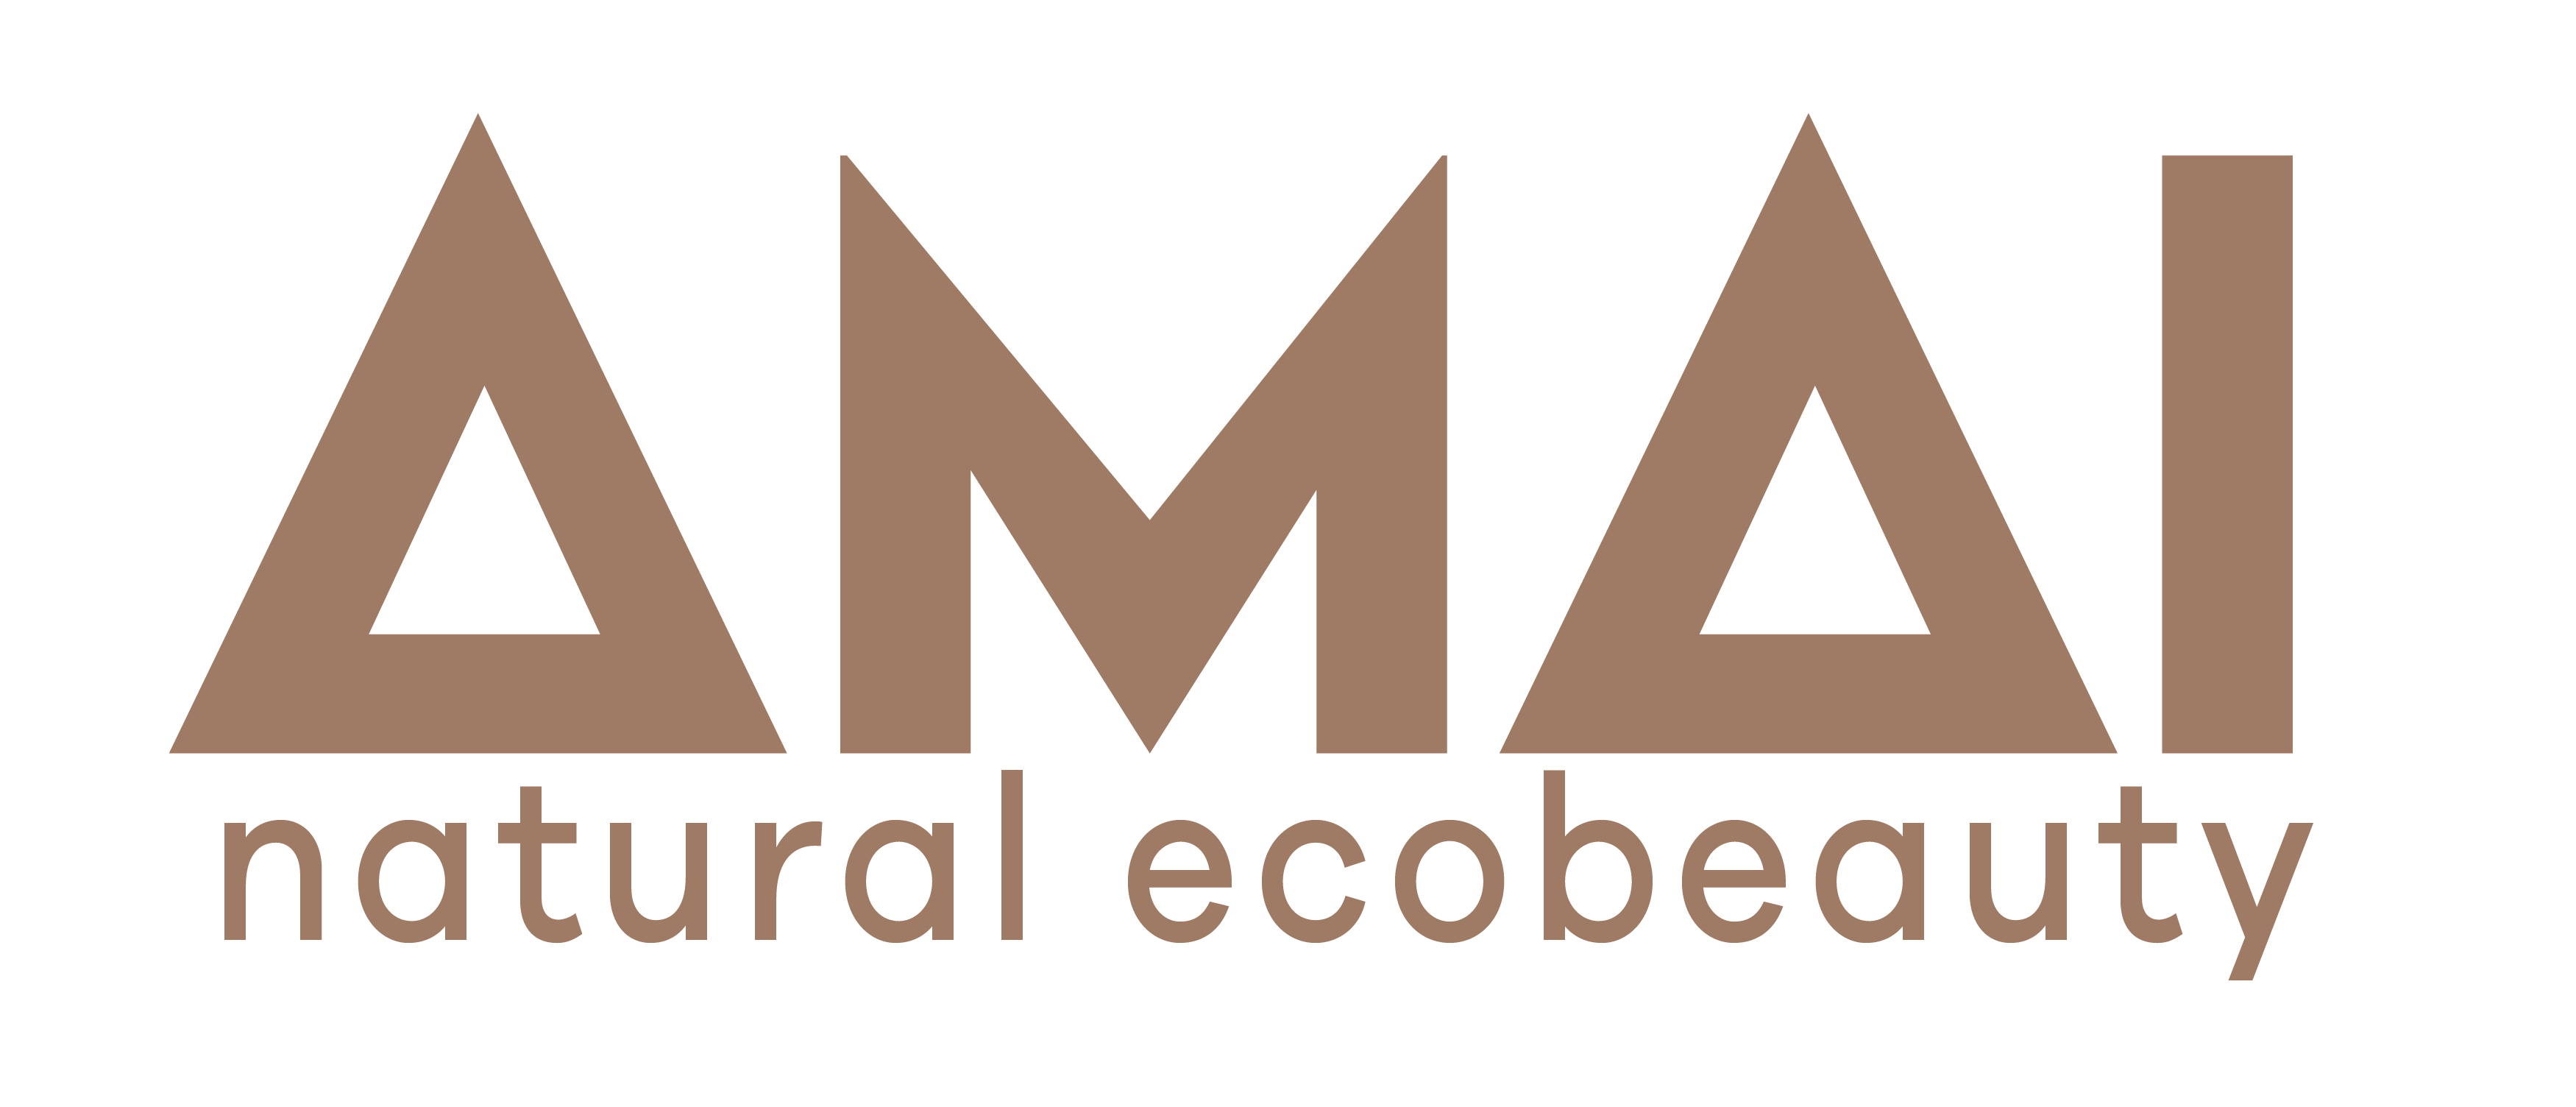 AMAI natural eco beauty brand